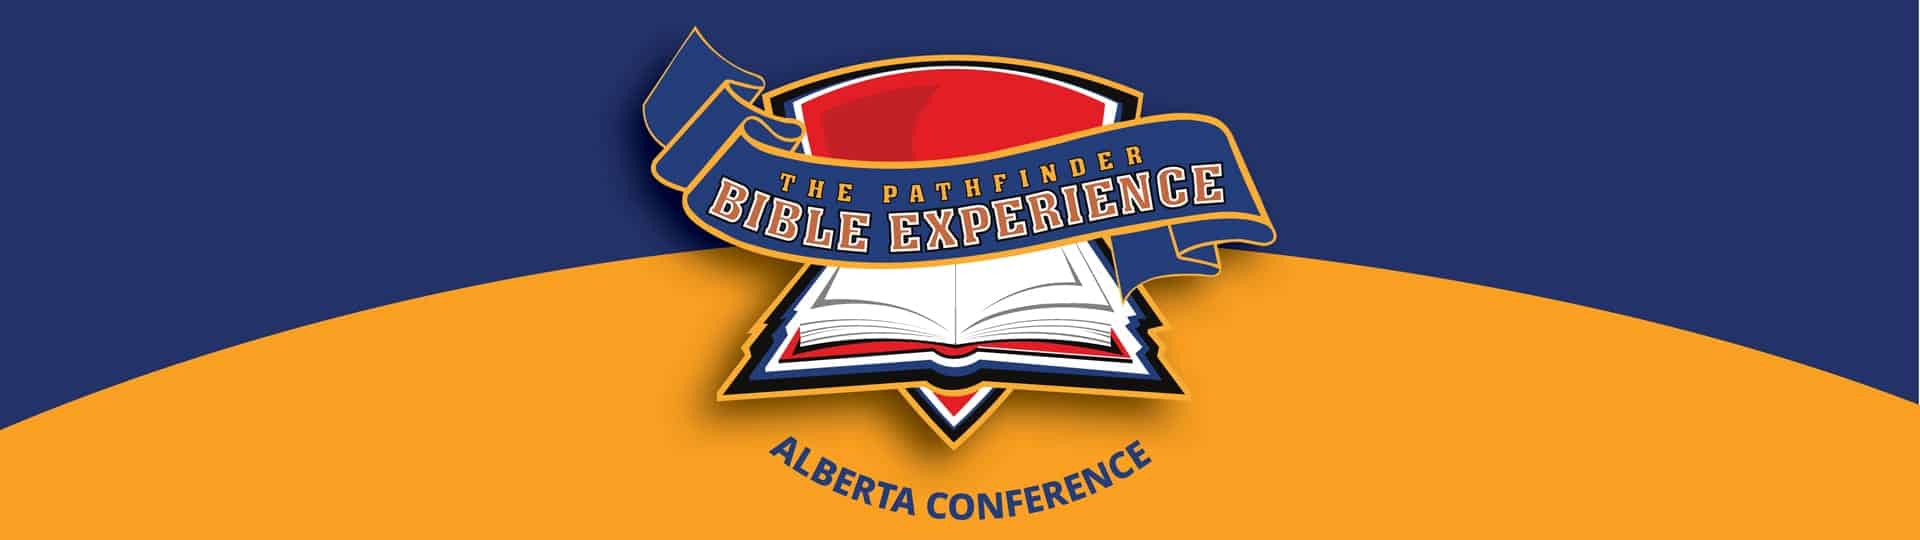 Pathfinder Bible Experience Header